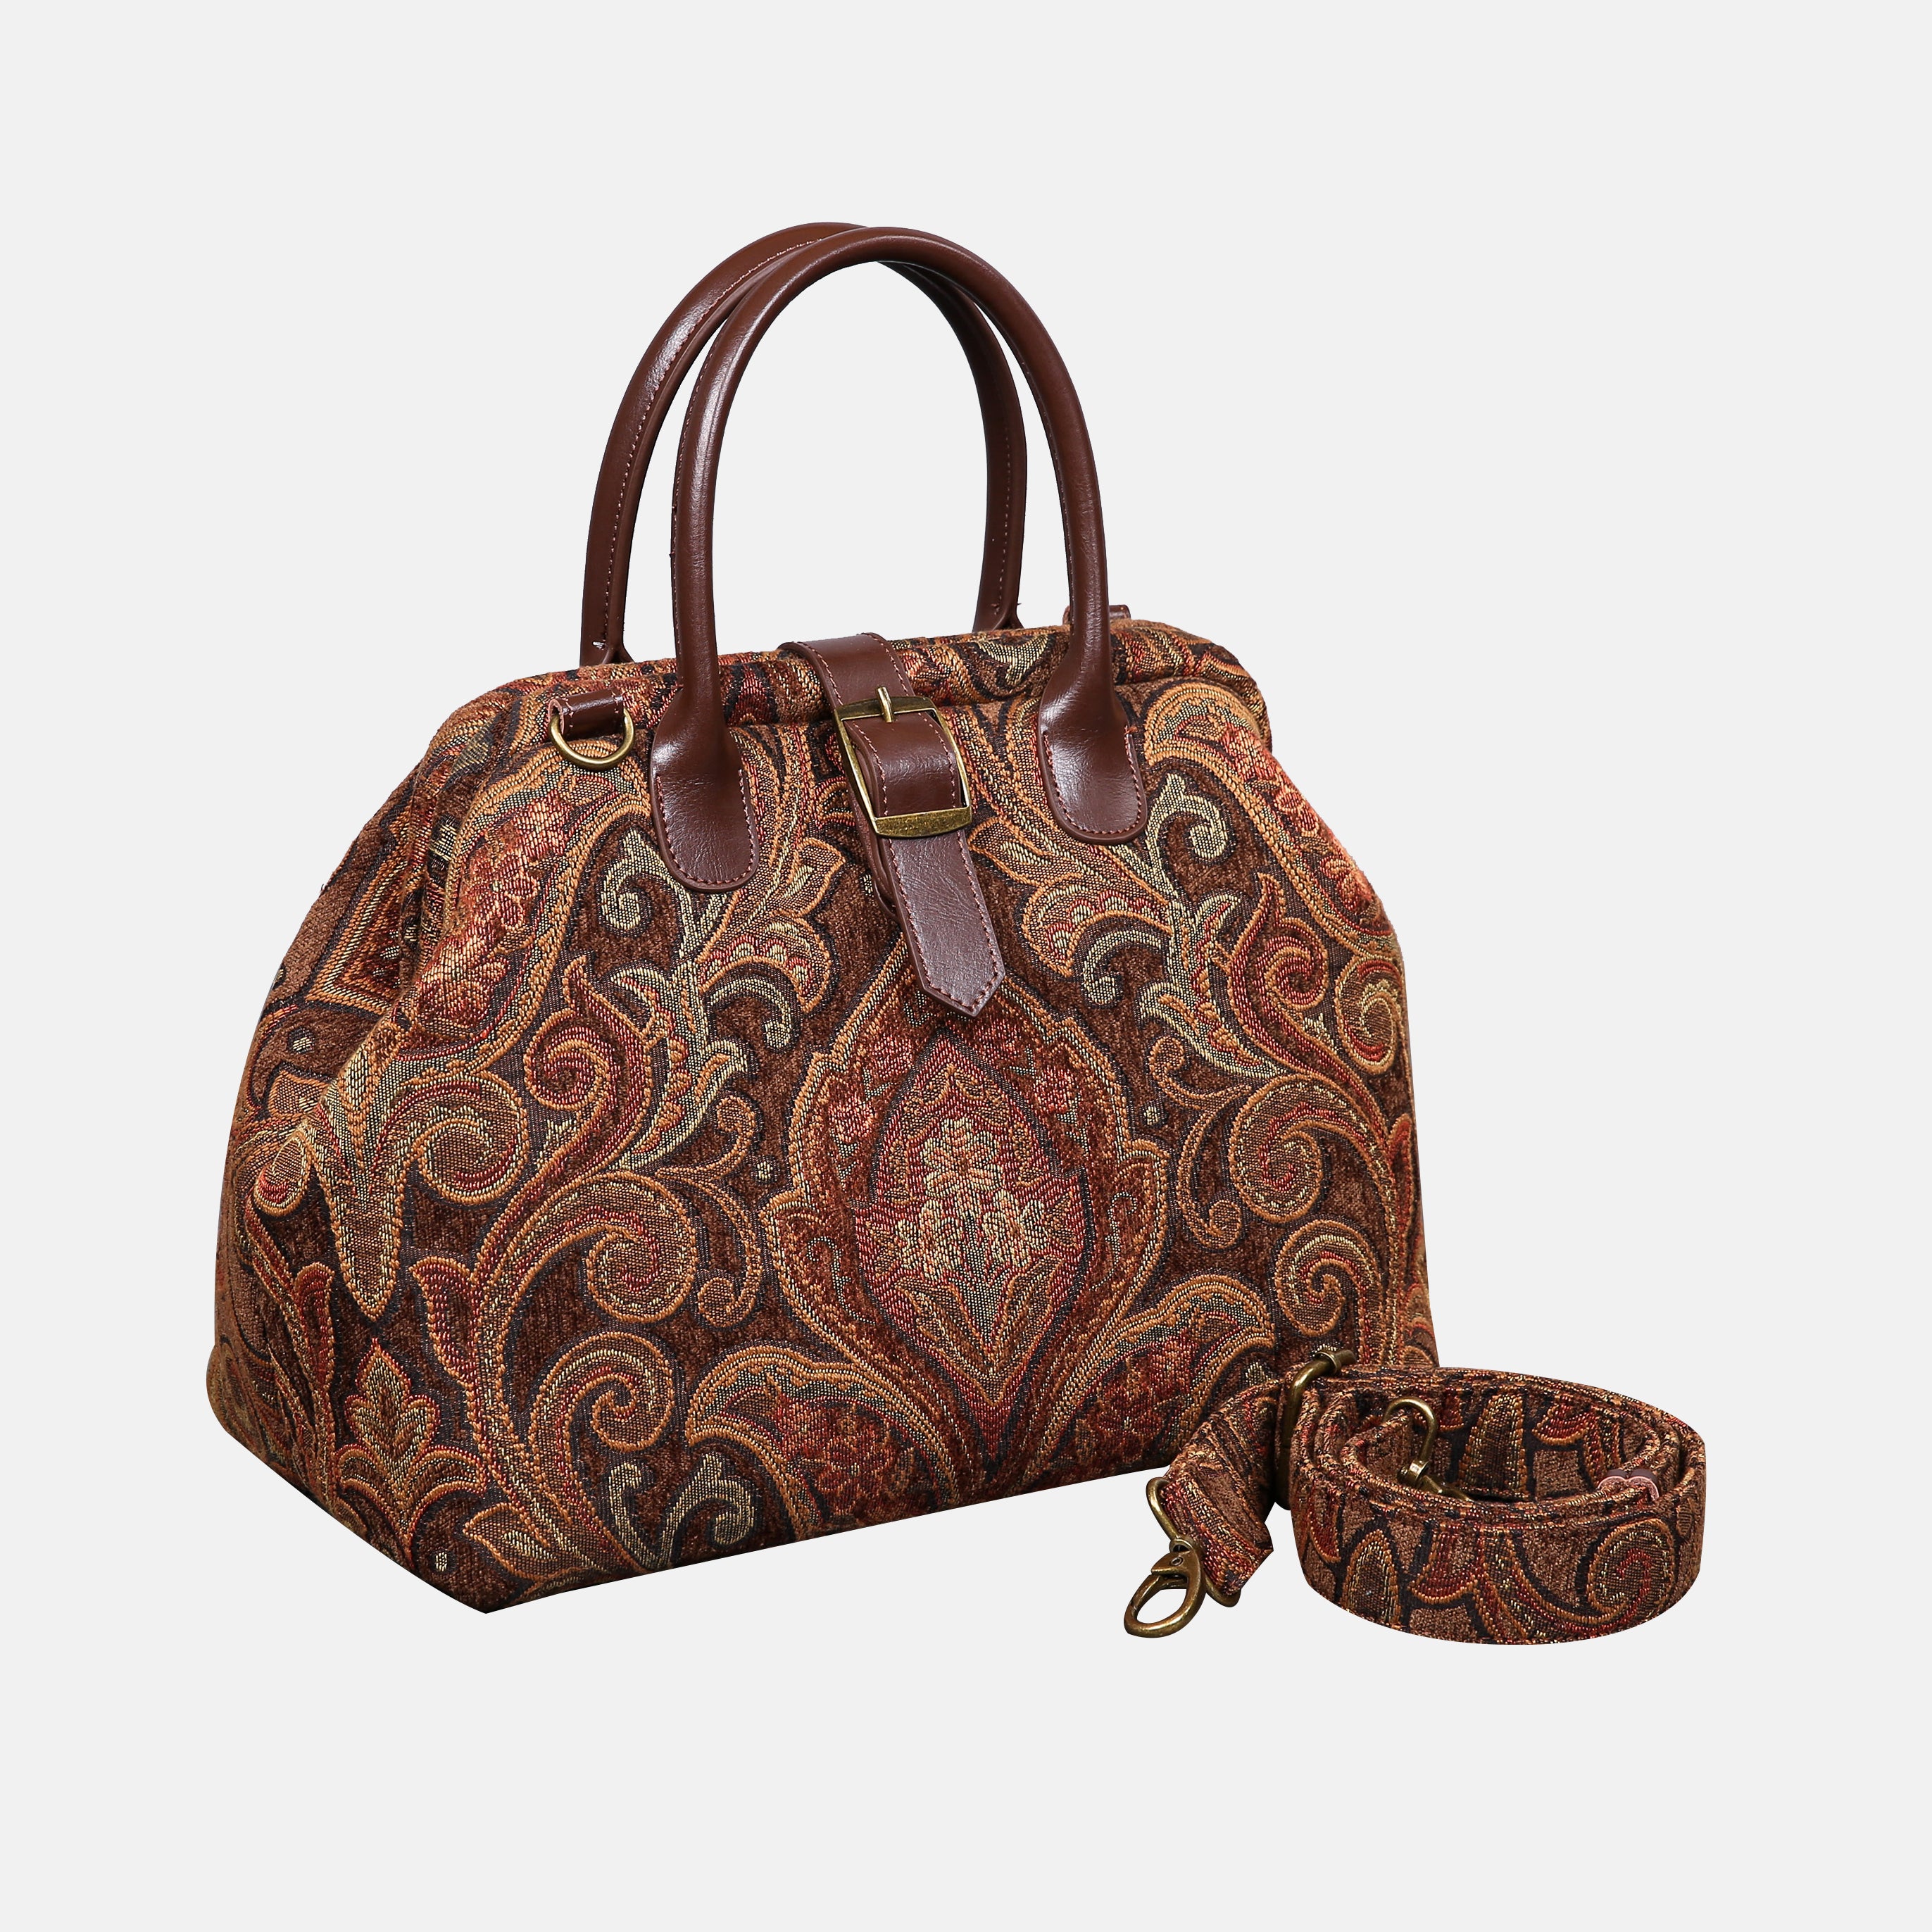 Damask D. Brown Carpet Handbag Purse carpet bag MCW Handmade-1